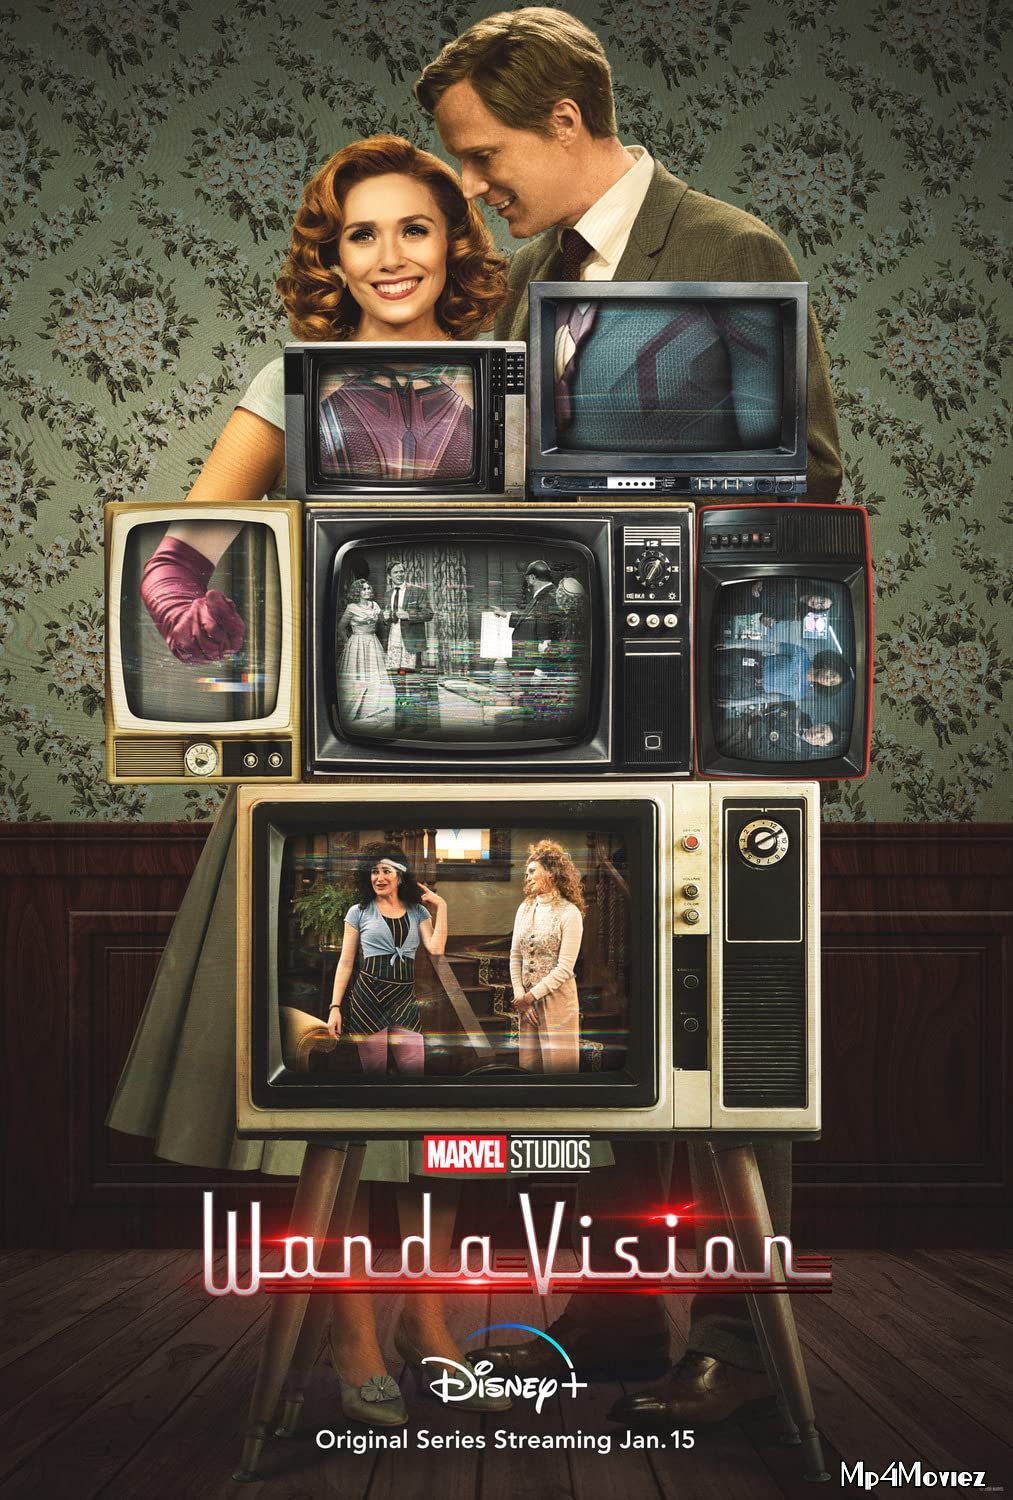 WandaVision (2021) Season 1 (Episode 3) Full Episode download full movie